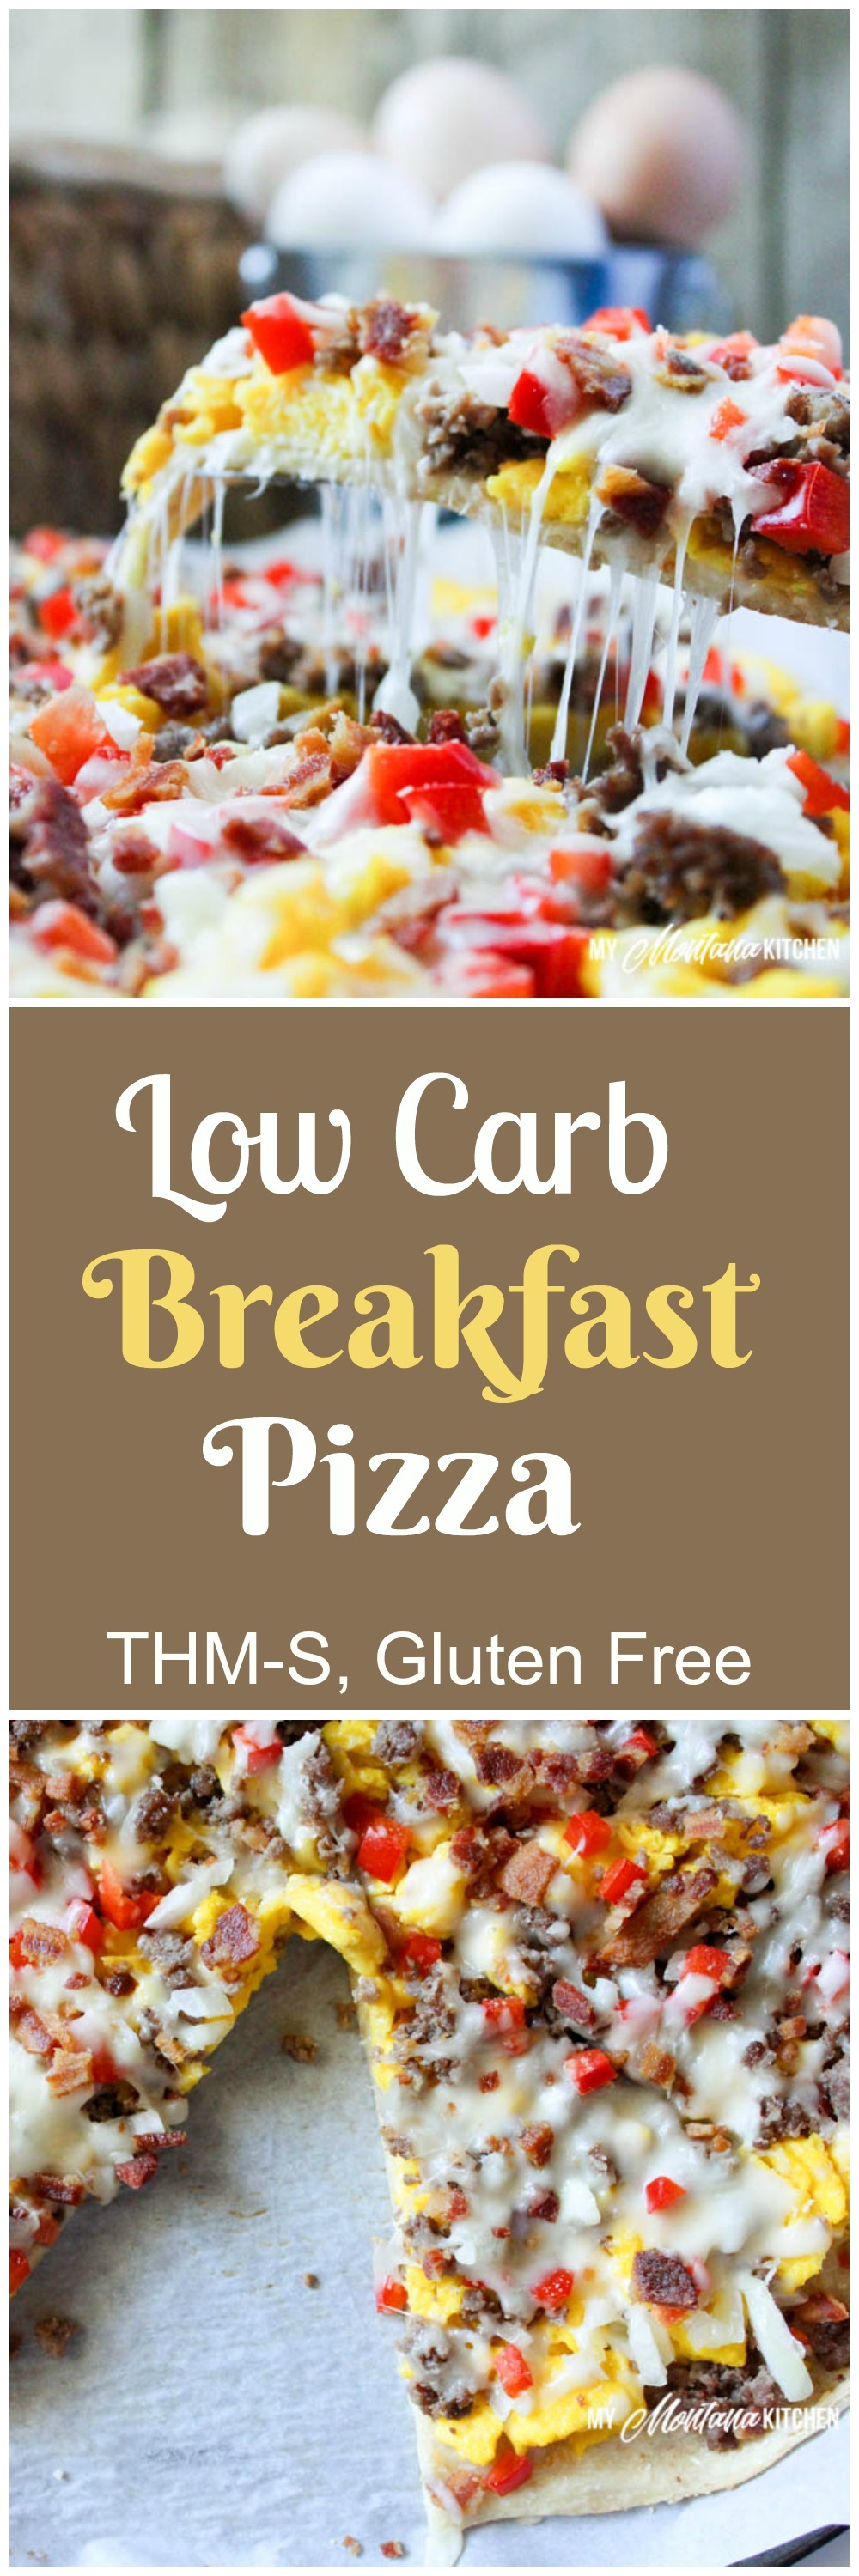 Low Carb Breakfast Pizza (THM-S, Gluten Free)